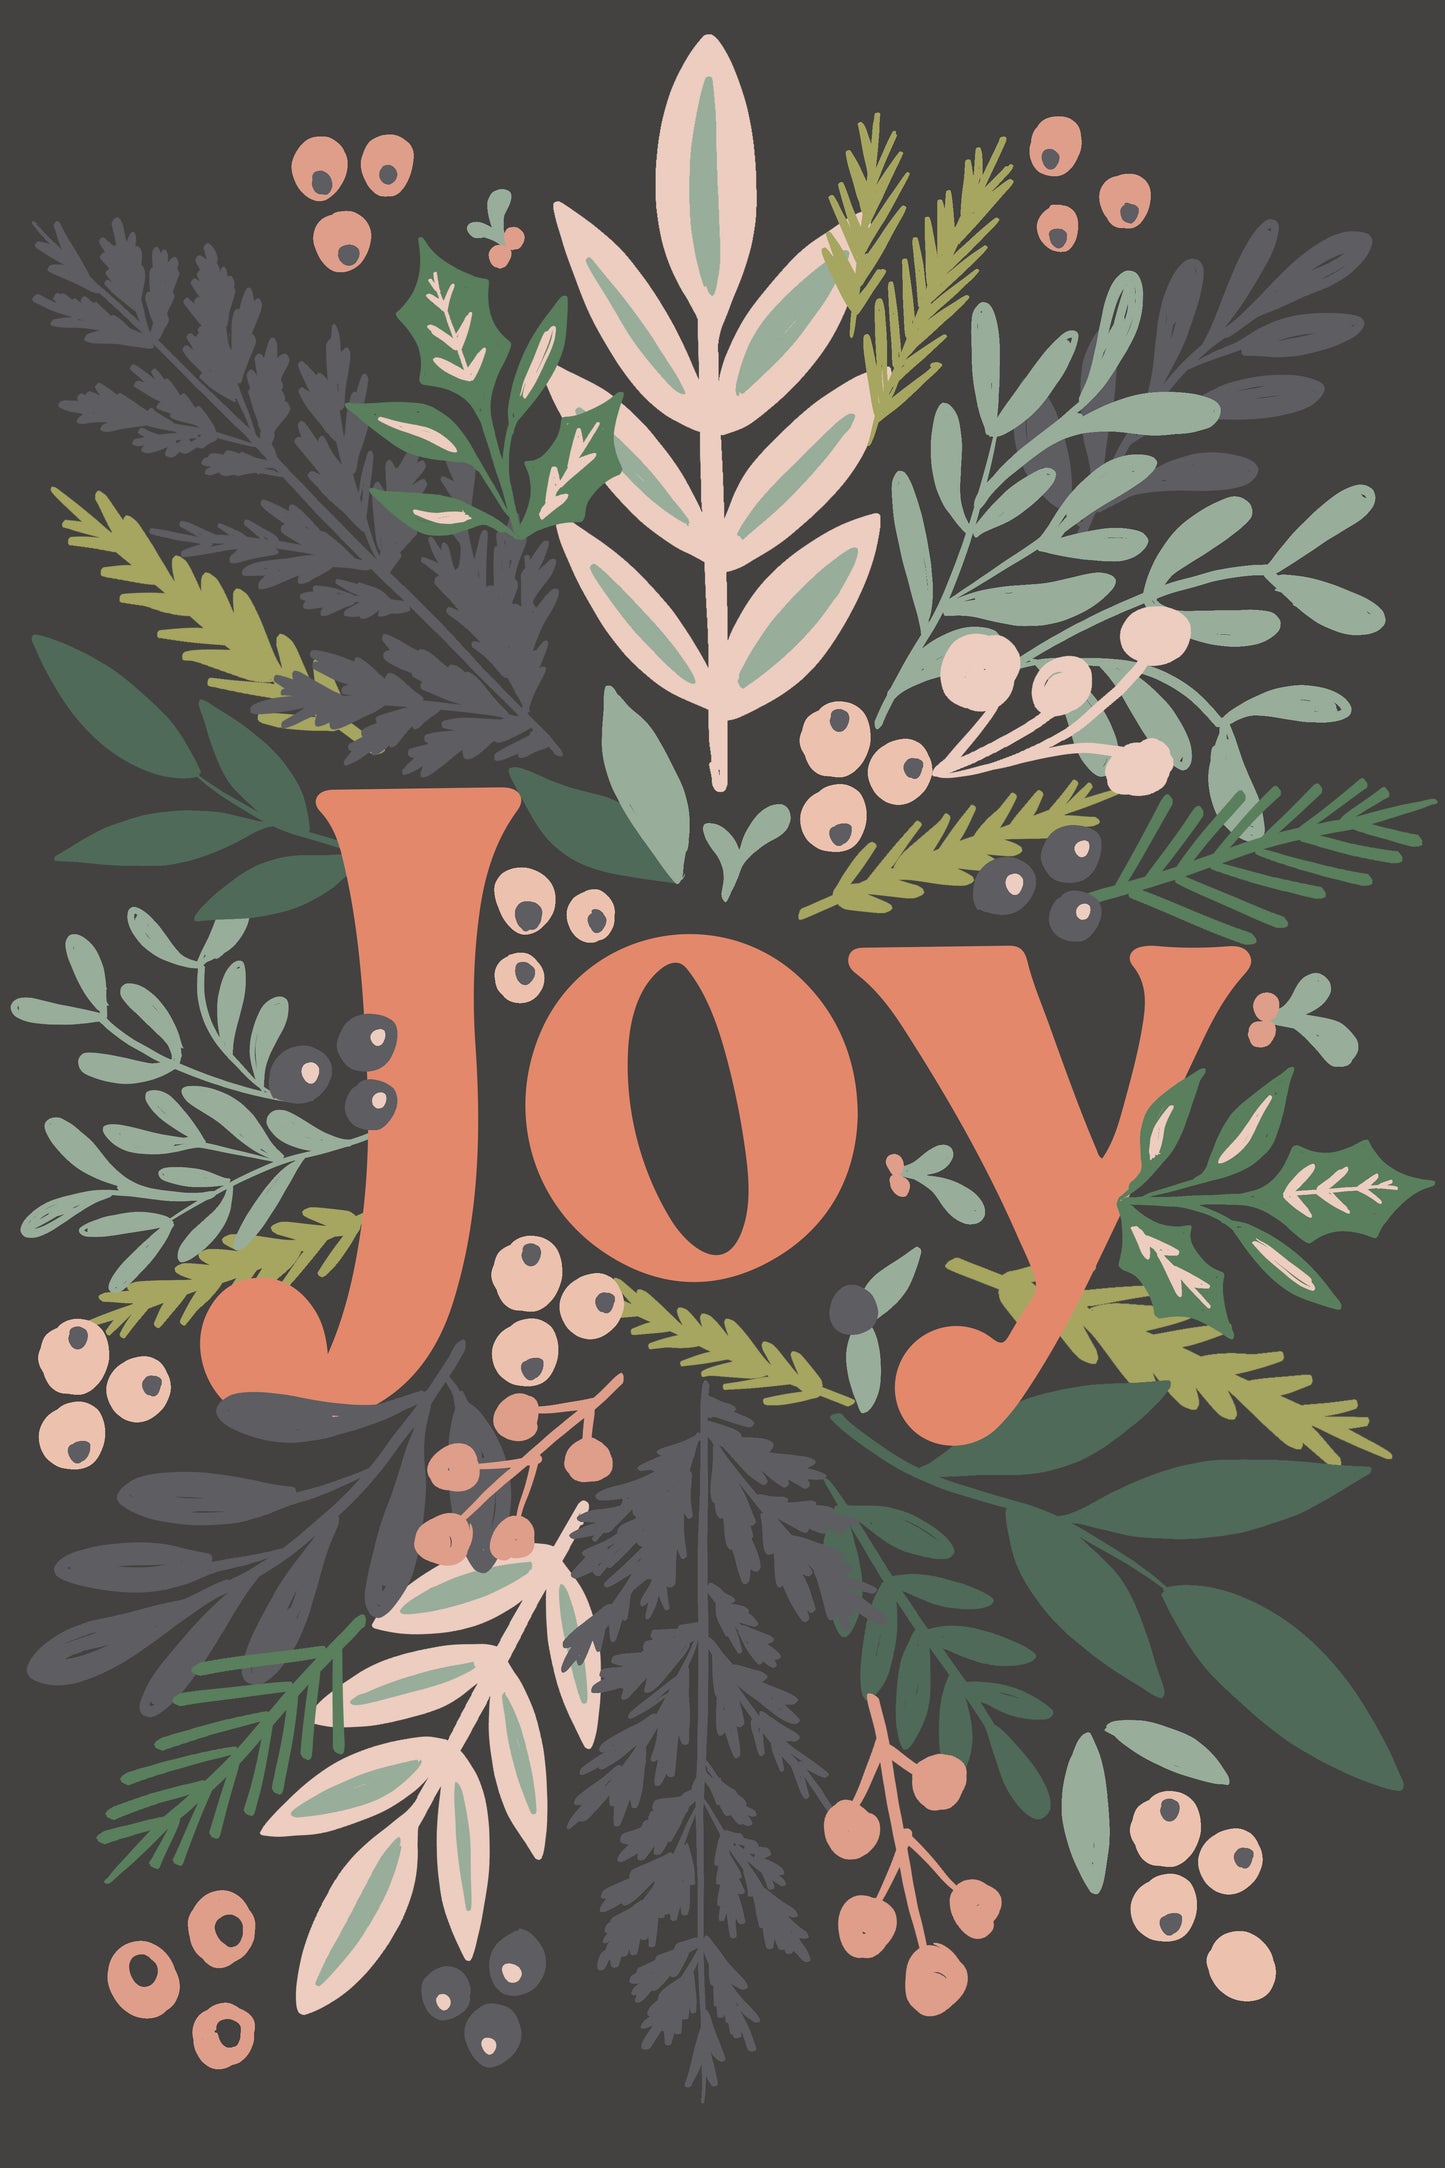 Abundant Joy Paint by Number Kit